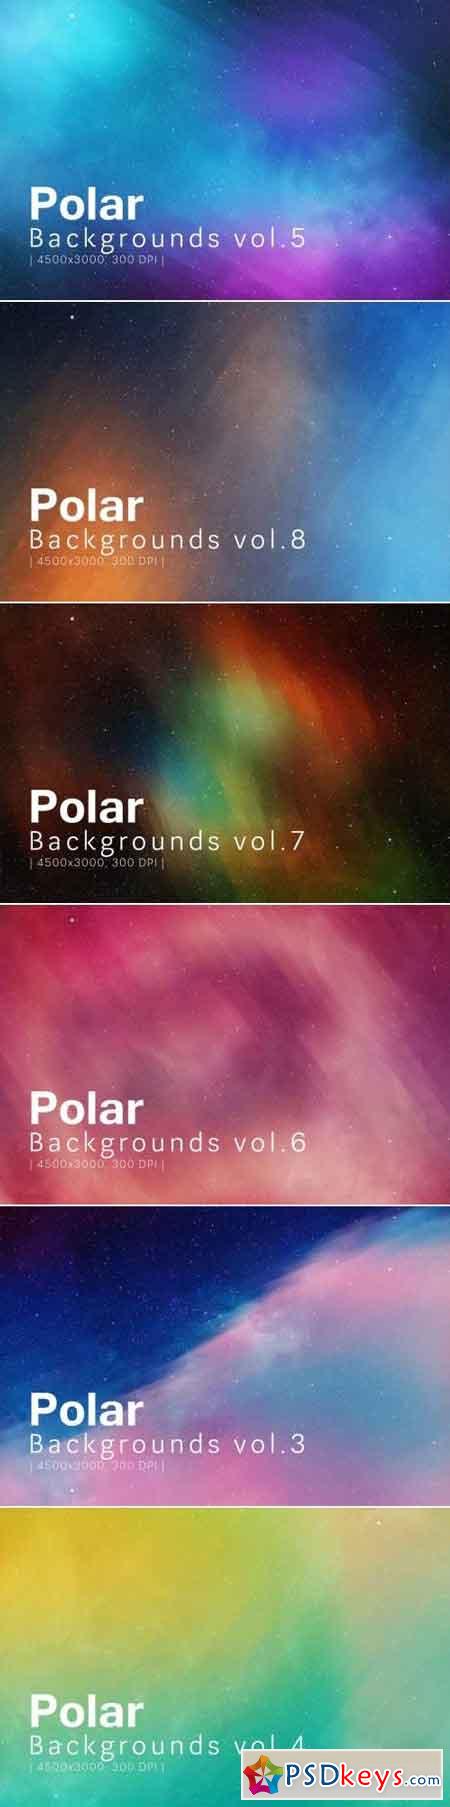 Polar Backgrounds Bundle 2